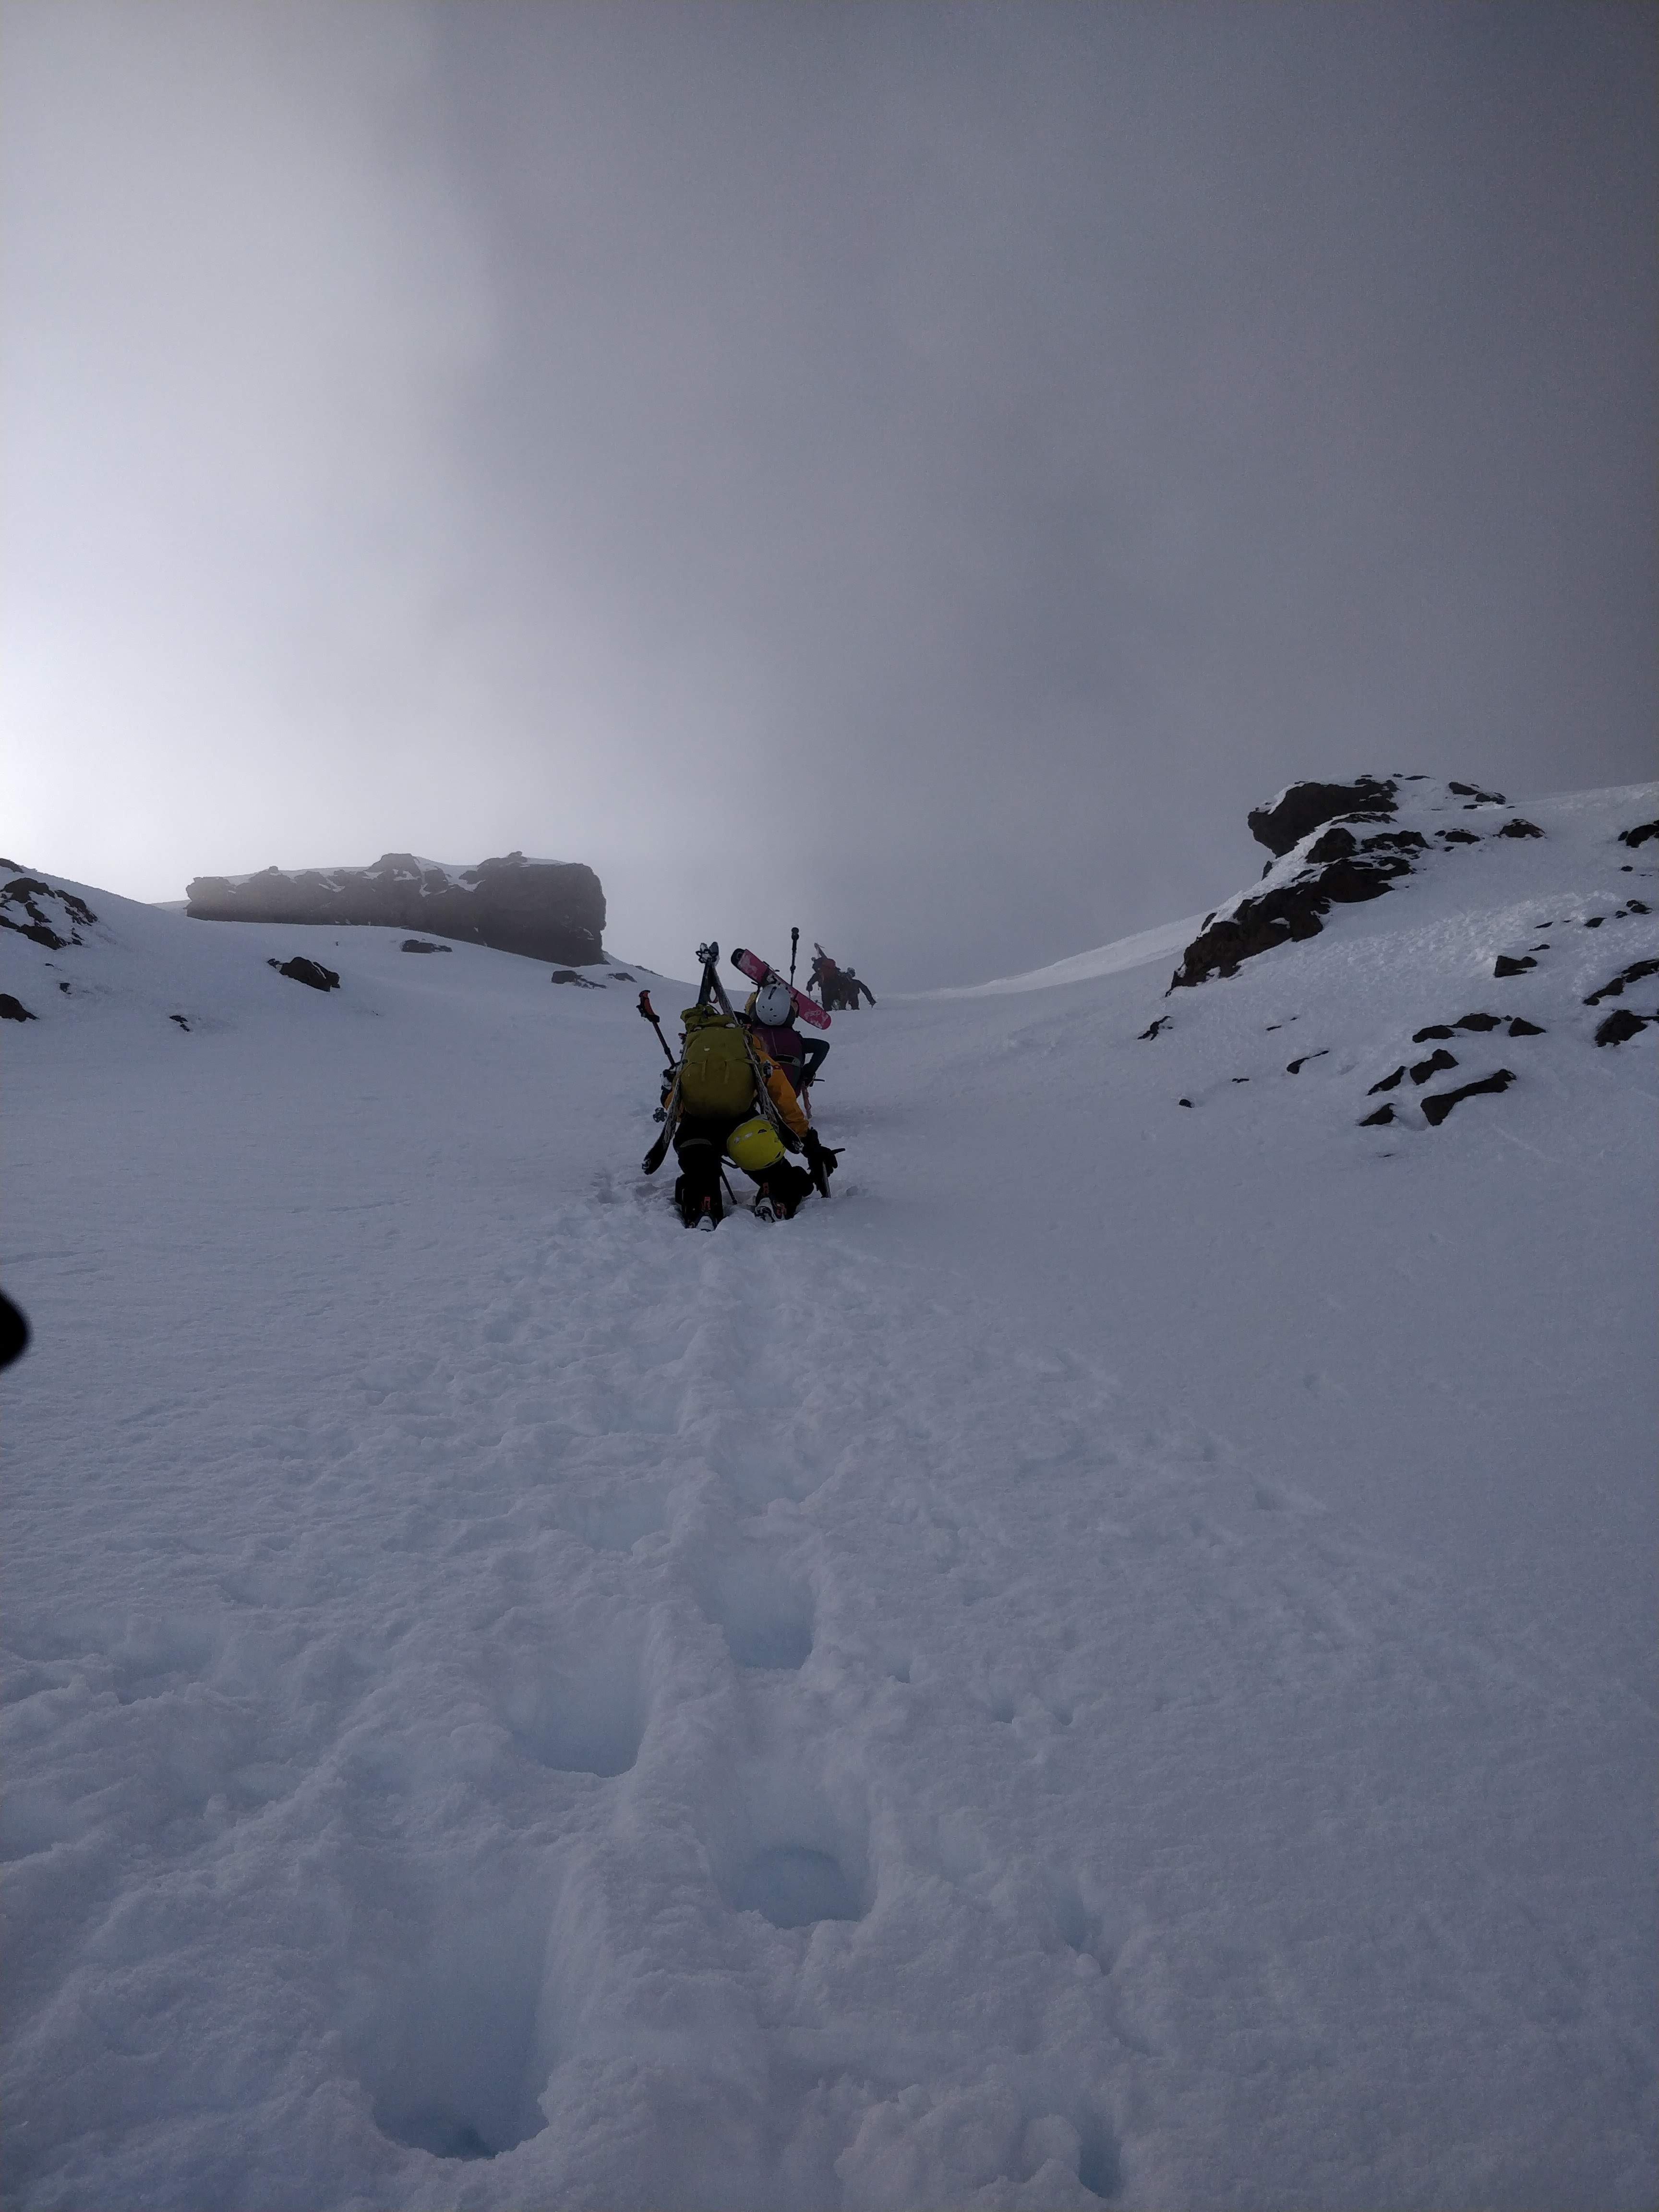 Approaching the Summit of Mt. Garibaldi